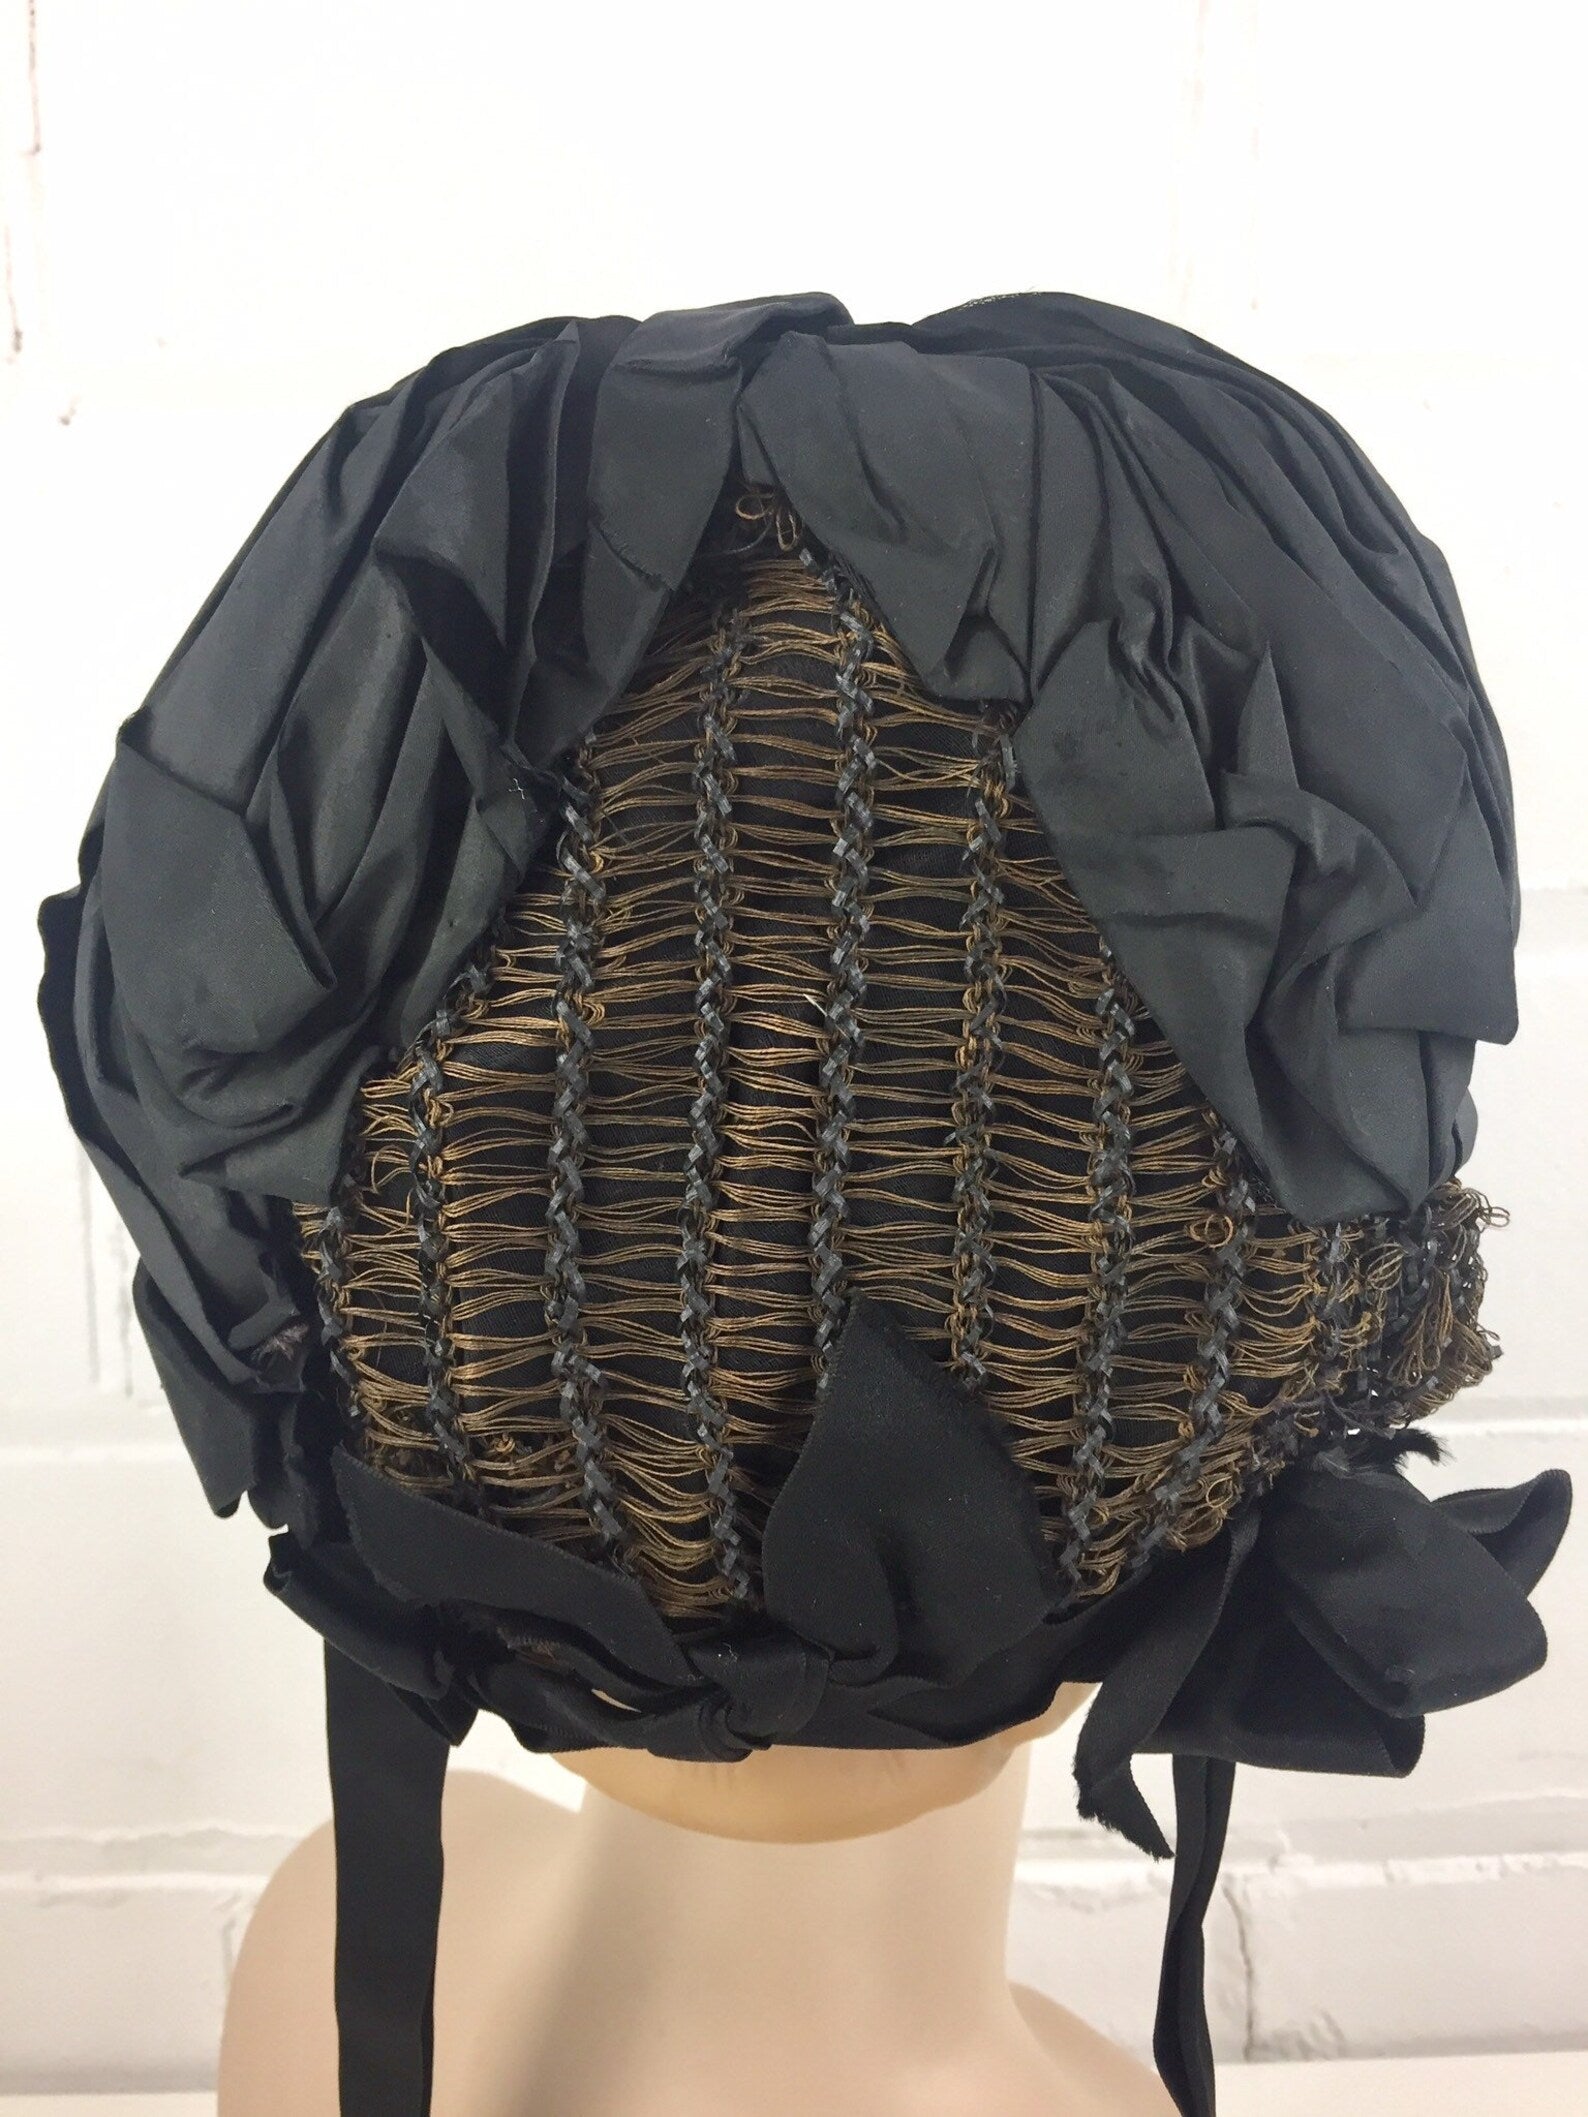 Antique Victorian Black Mourning Bonnet Cap with Brown & Black Ribbon Trim, Strong Wire Frame, Vintage Womens Bonnets